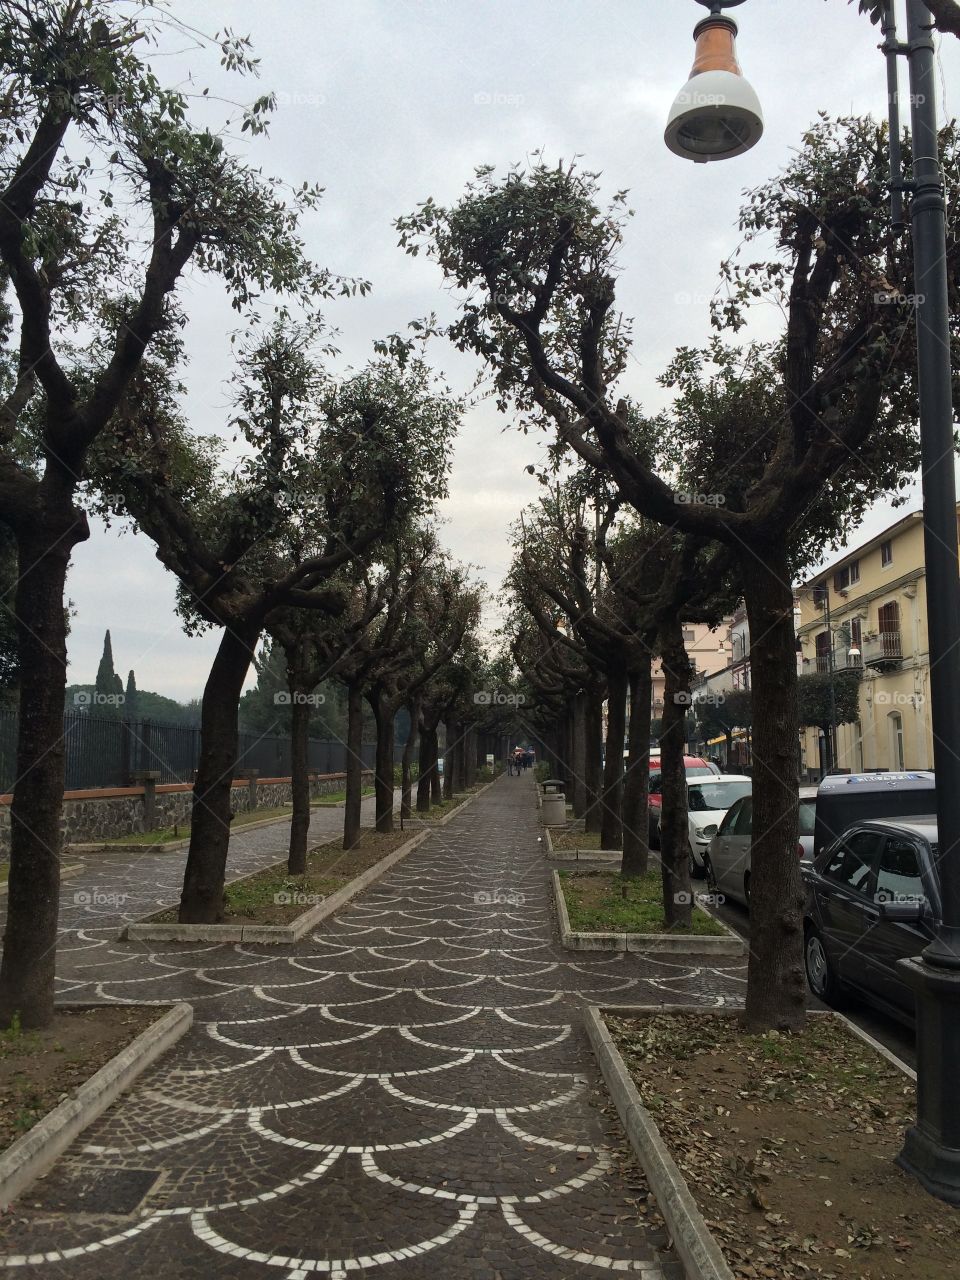 Pompeii trees